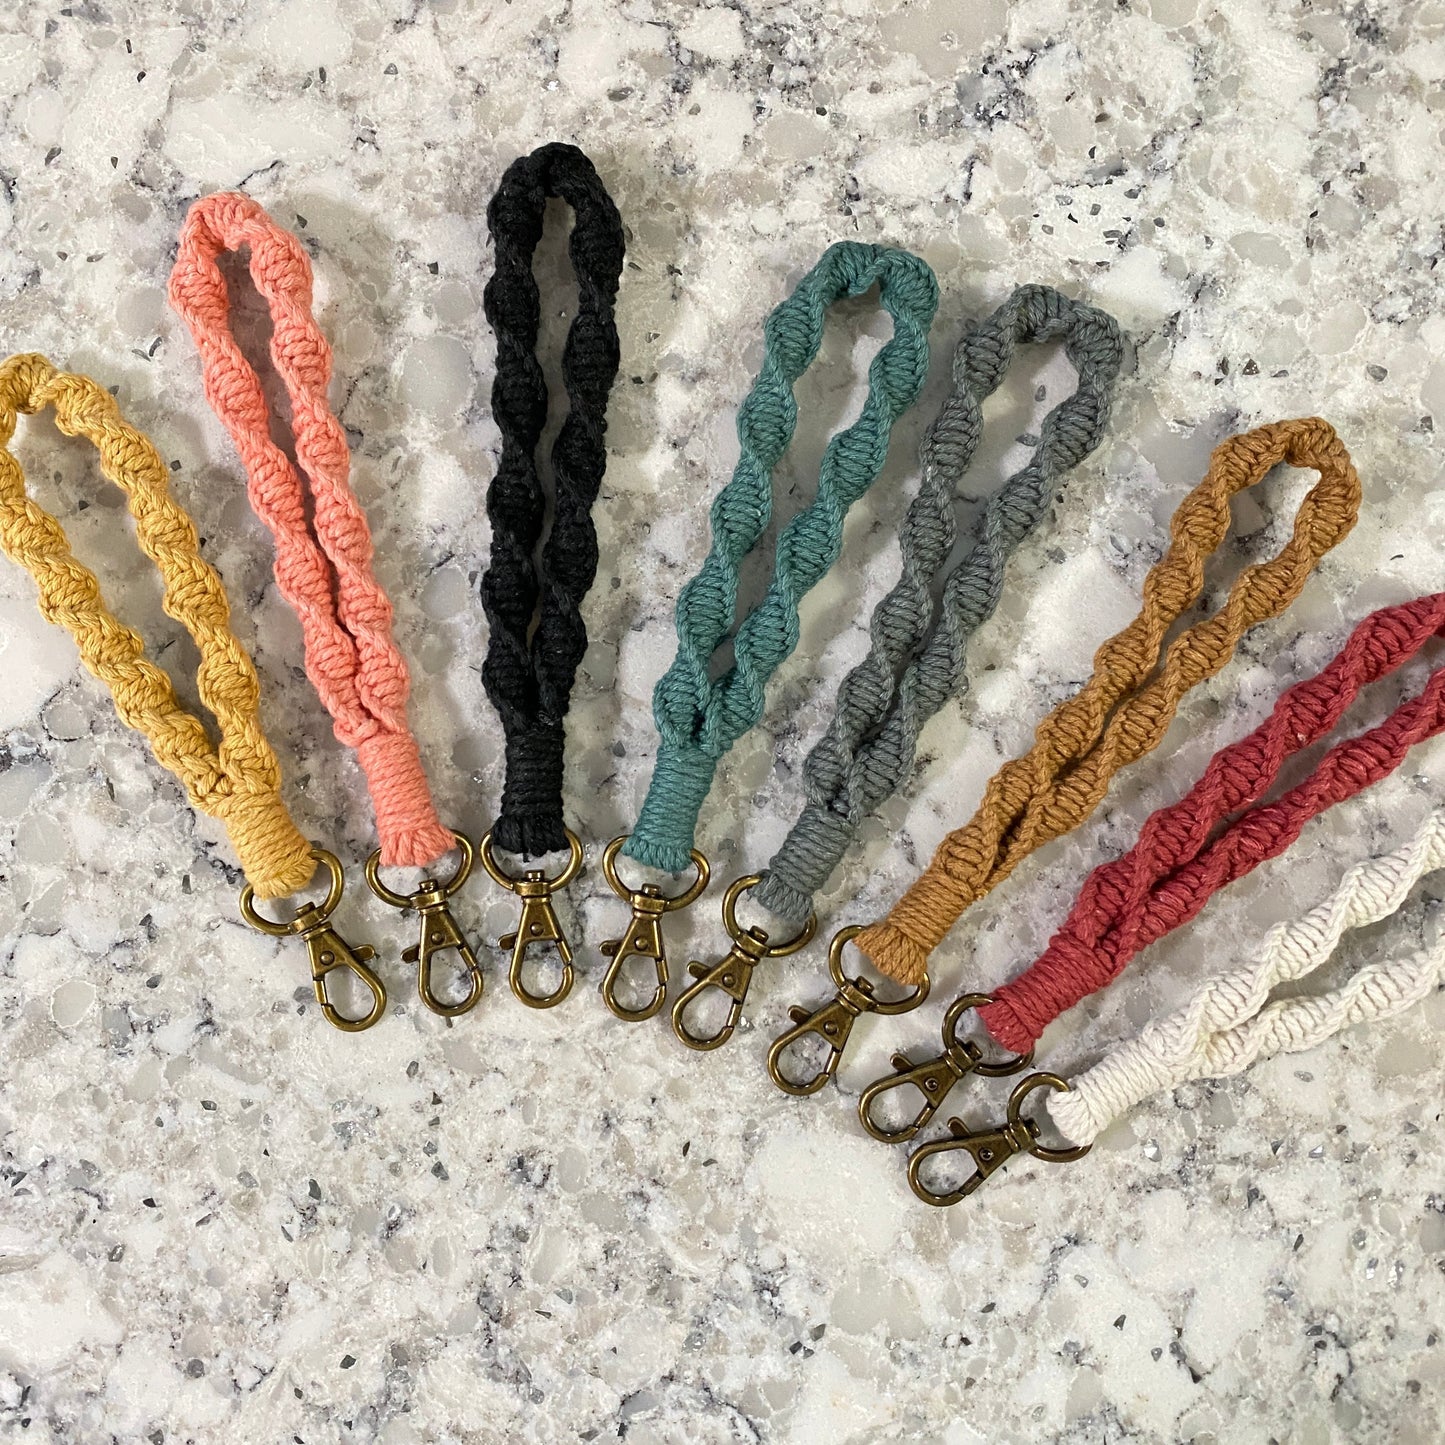 Keychain - Twisted Macrame Bracelet LOCAL PICK UP OPTION